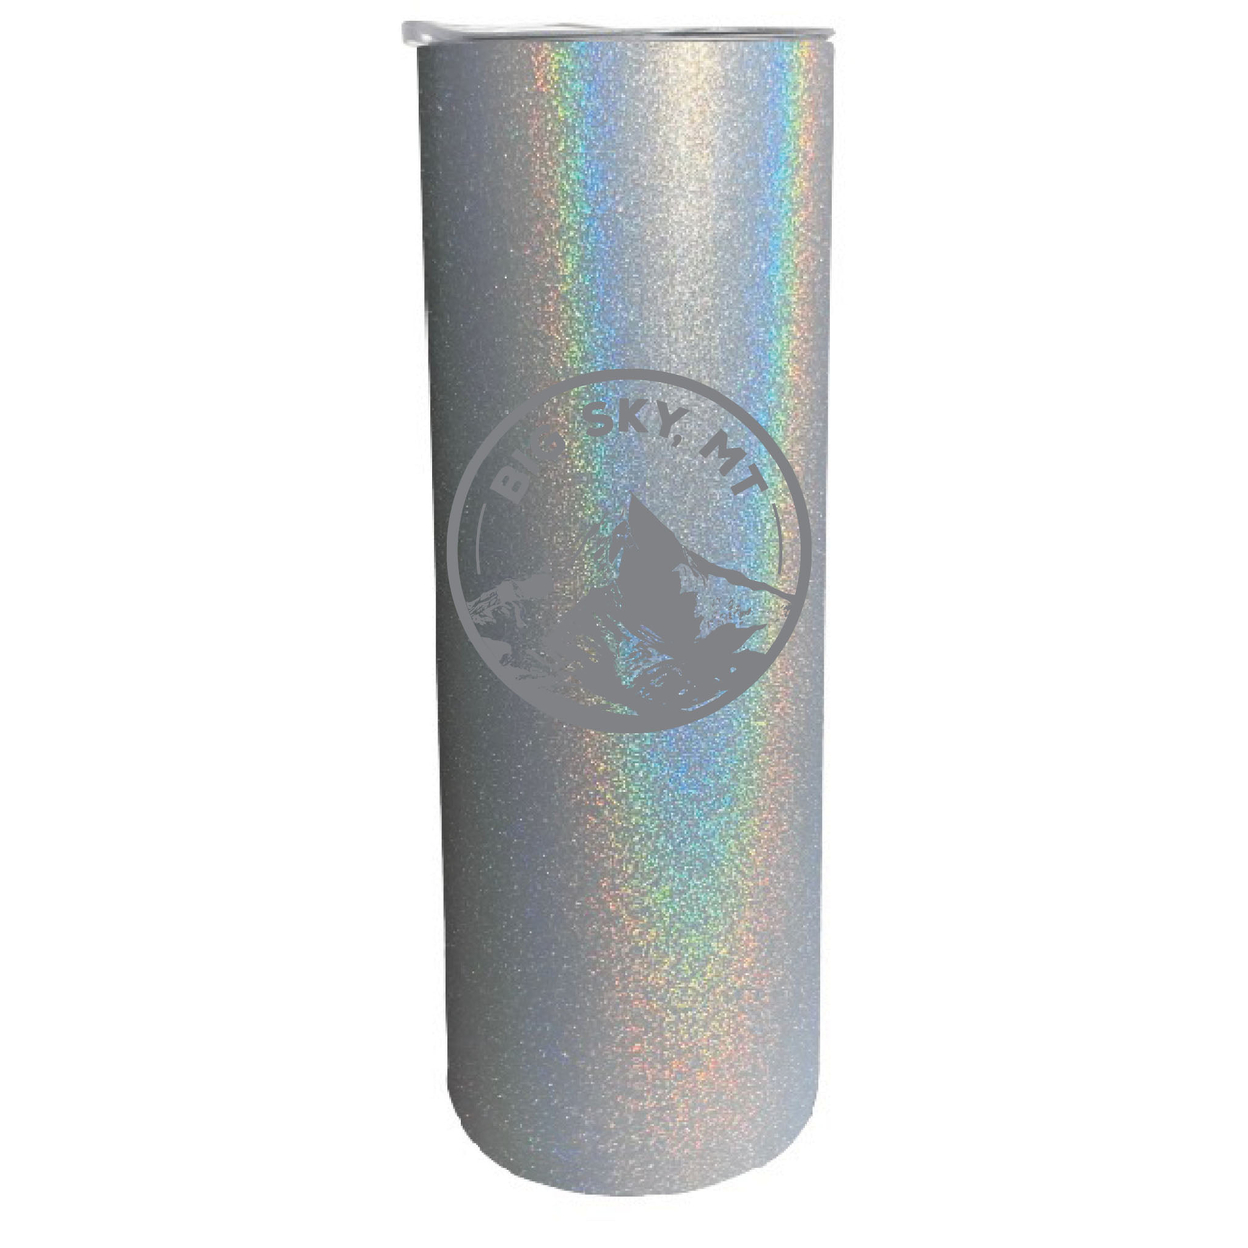 Big Sky Montana Souvenir 20 Oz Engraved Insulated Stainless Steel Skinny Tumbler - Gray Glitter,,Single Unit